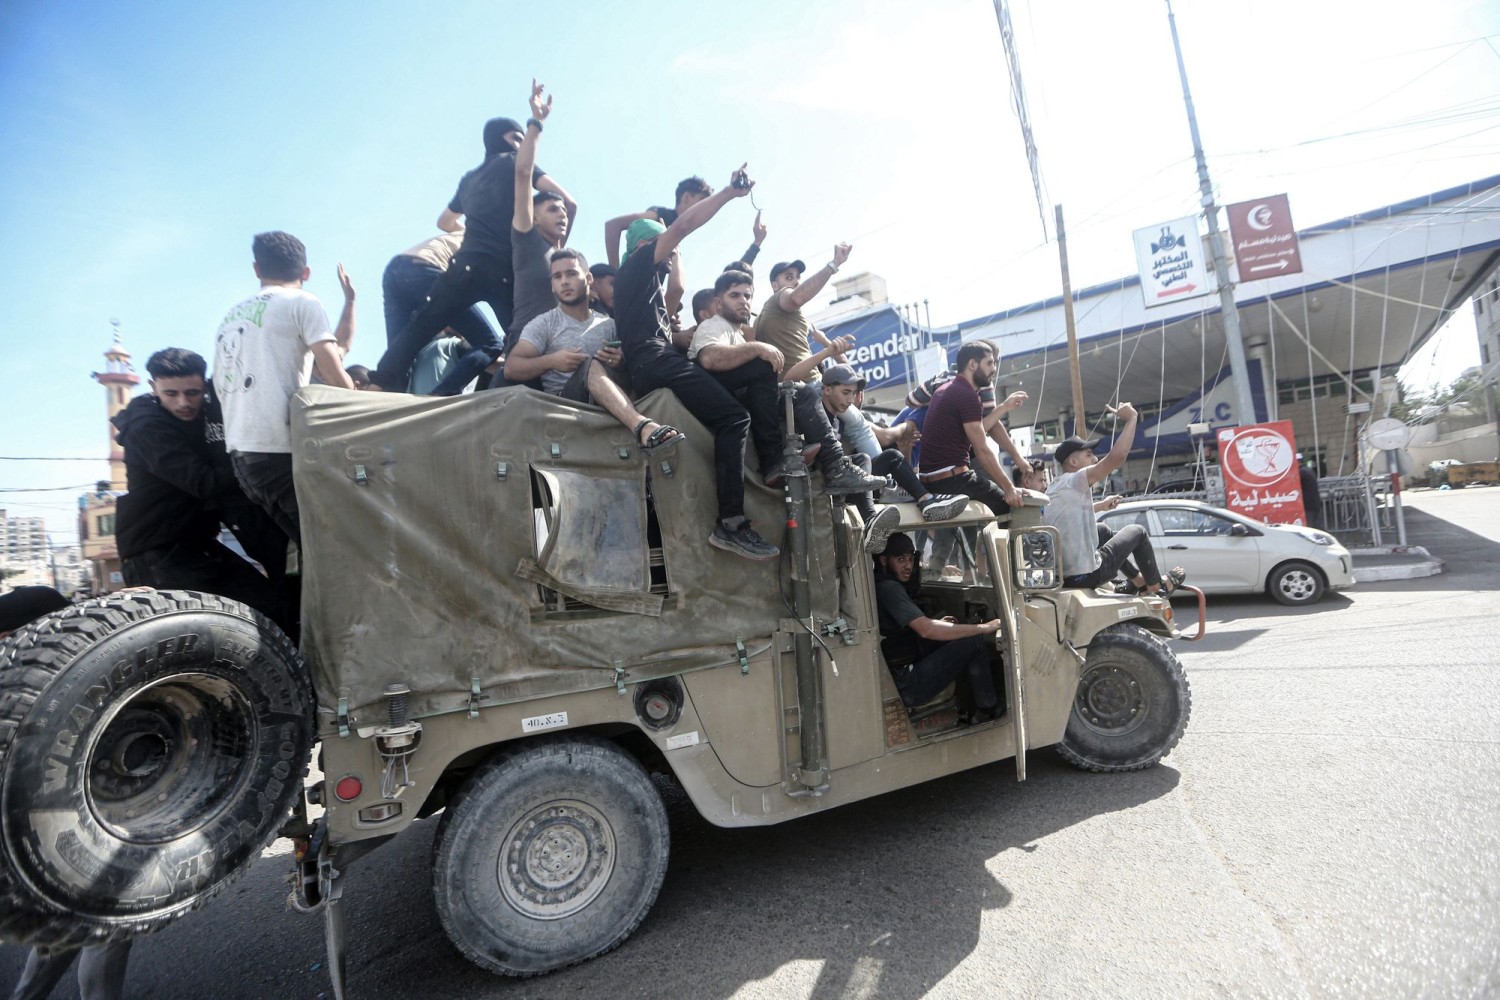 Palestinians in Gaza City commandeered an Israeli military vehicle on Saturday. MOHAMMED TALATENE/ZUMA PRESS